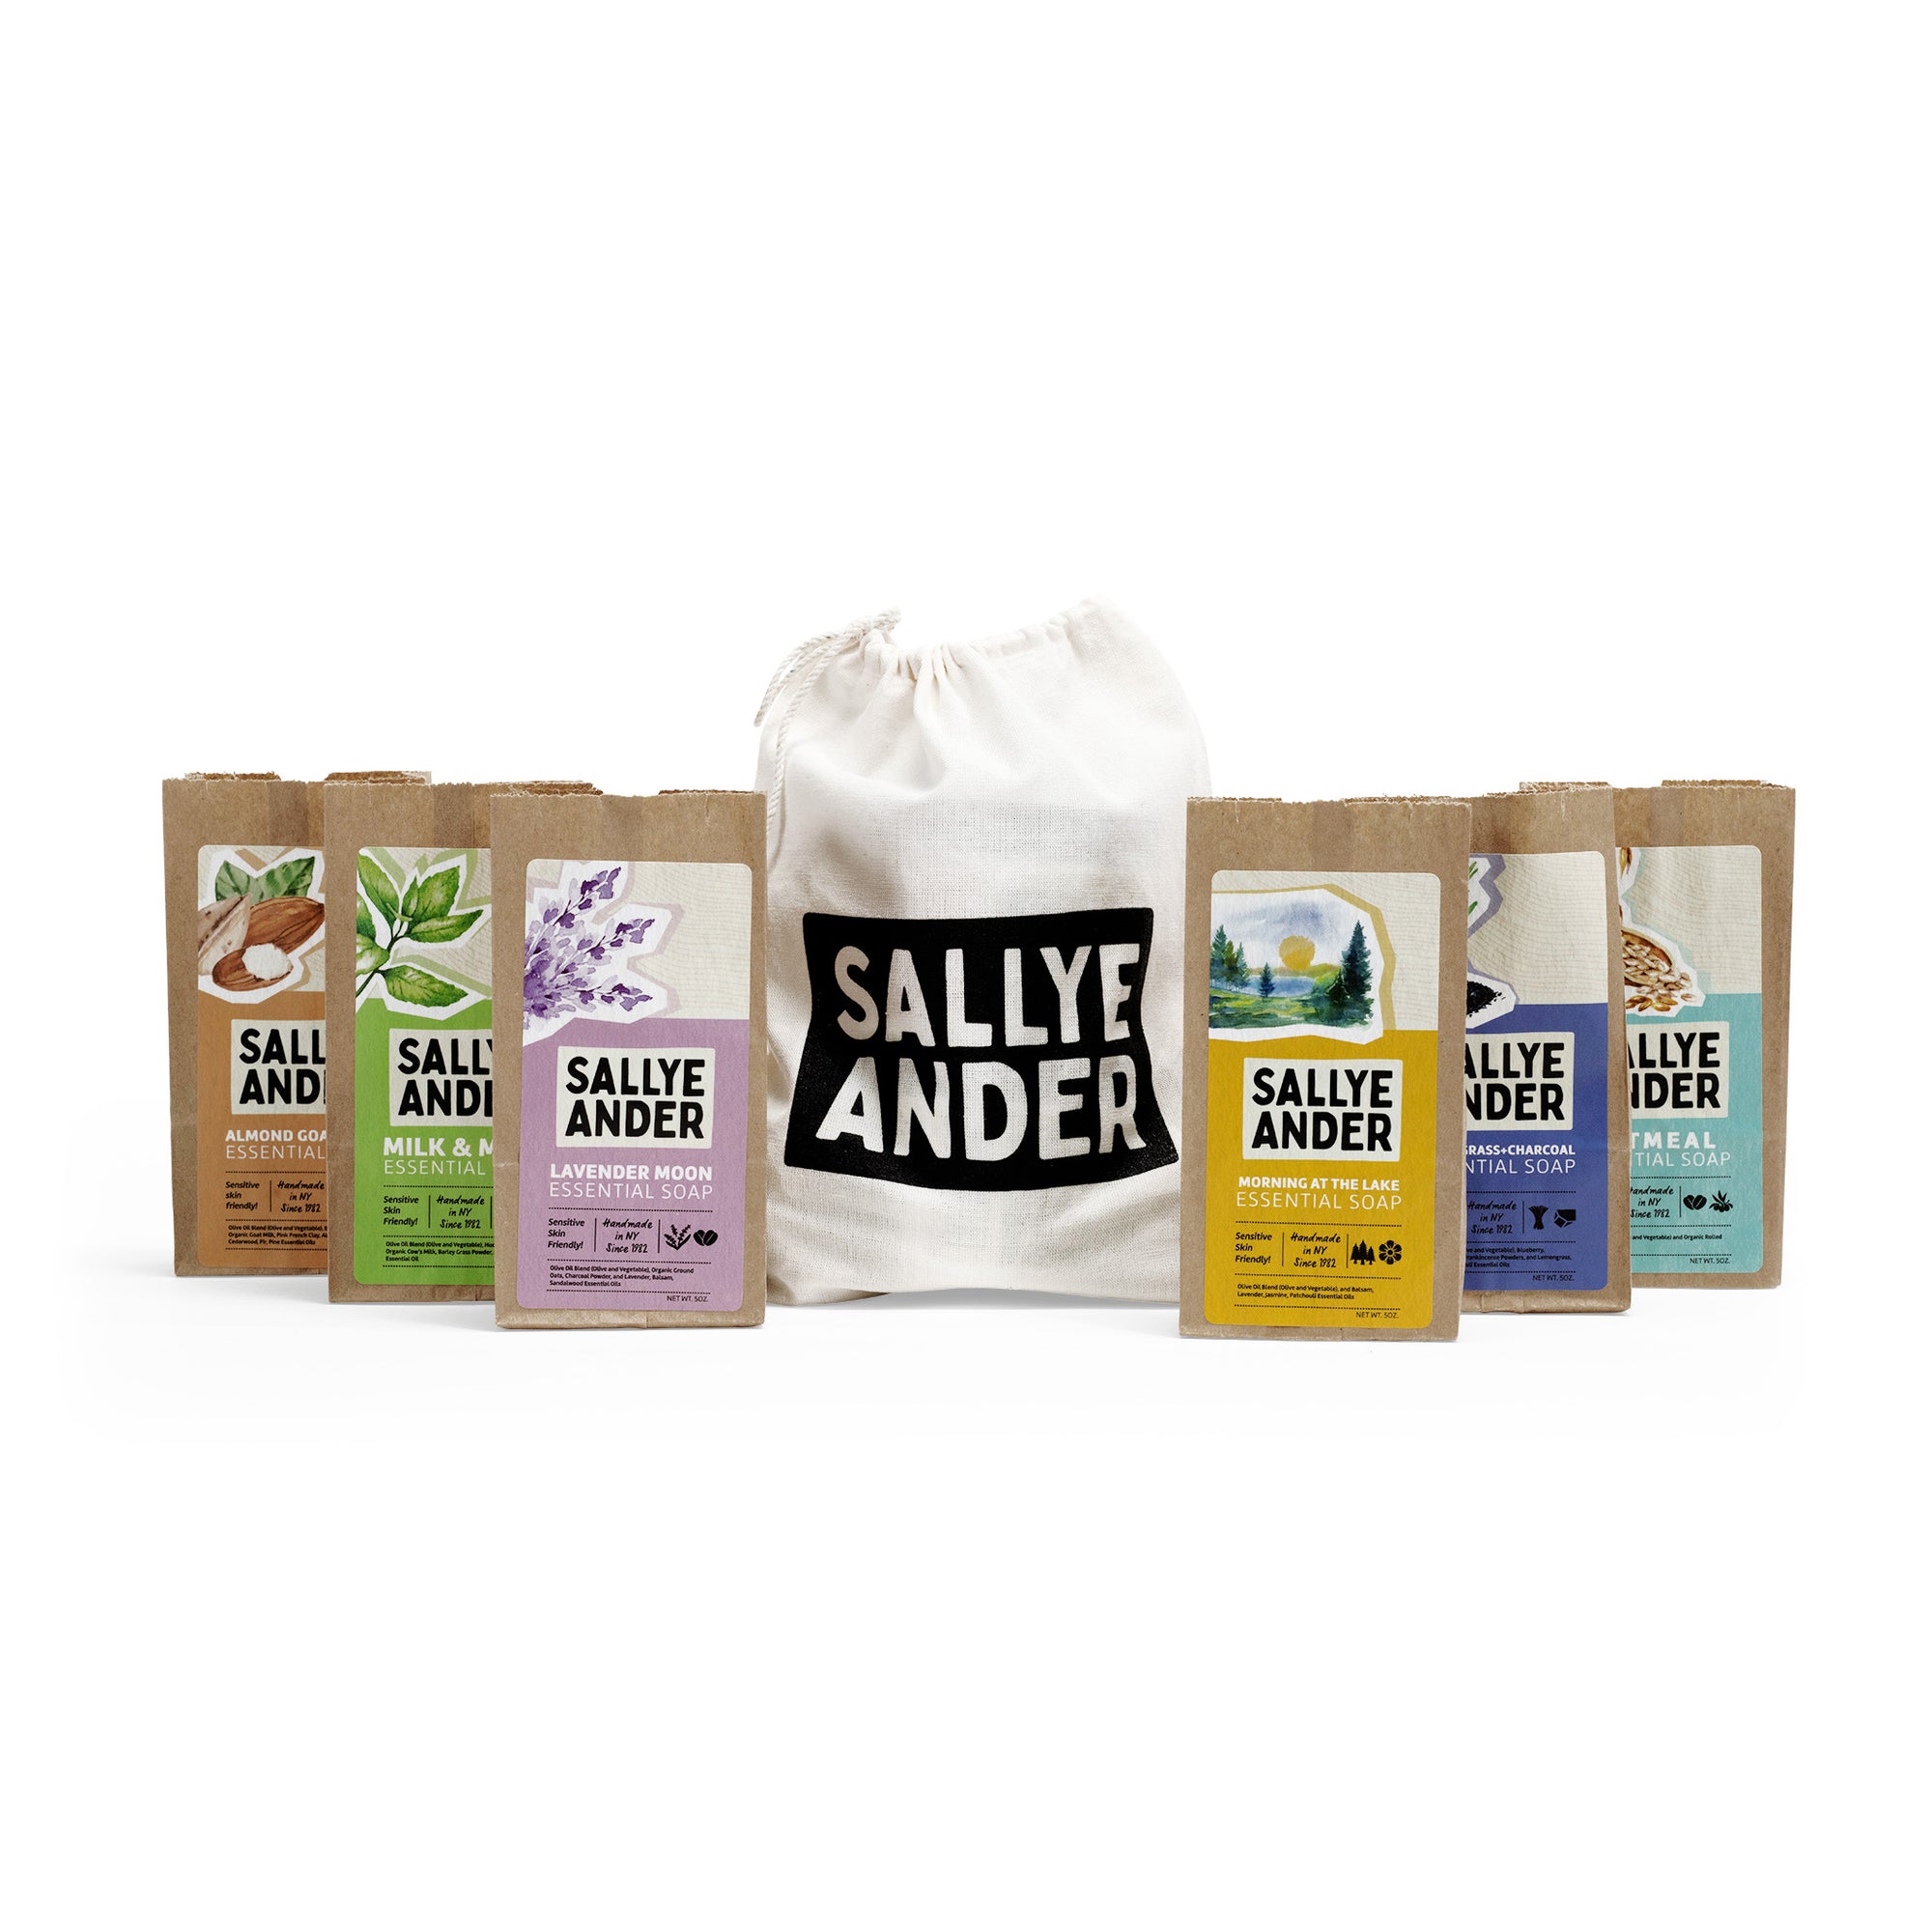 SallyeAnder's Pure Mild Baby Soap